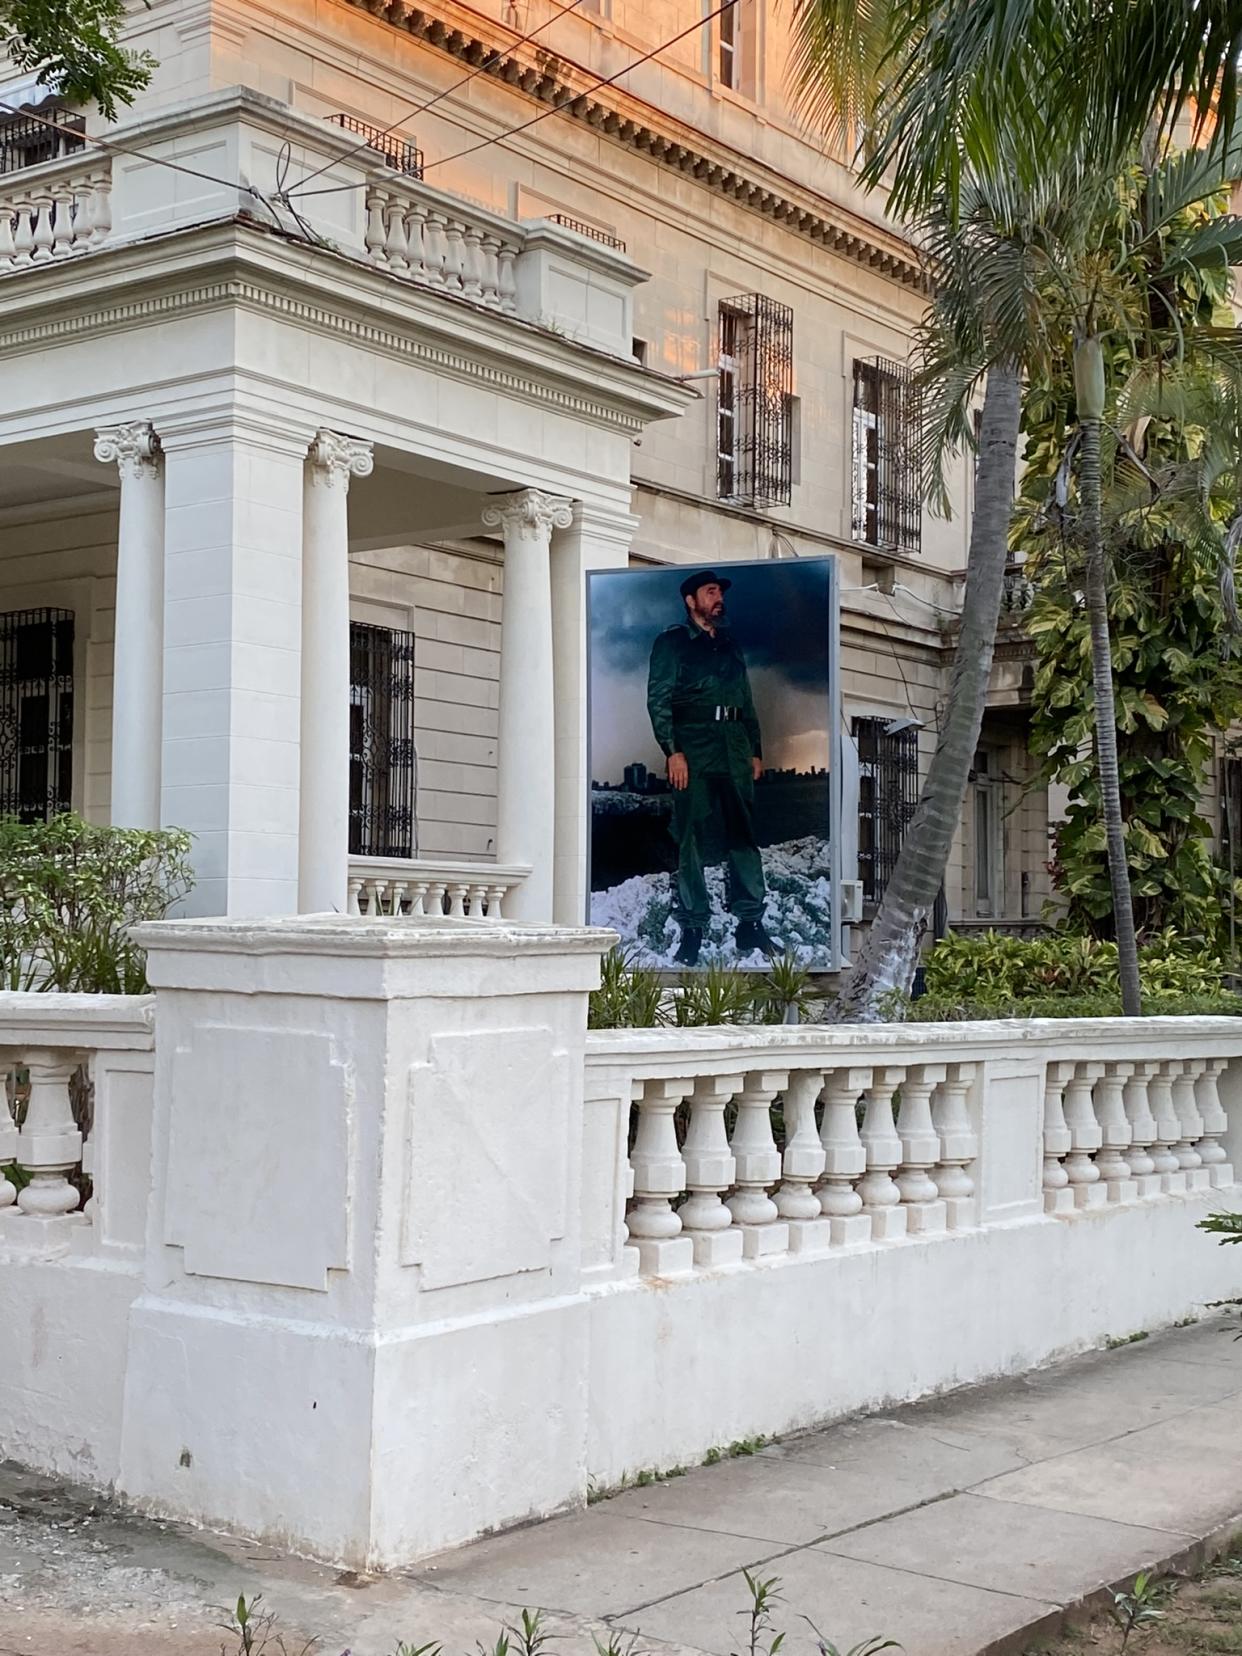 A portrait of Fidel Castro hangs beside a government health care facility in Havana. Photo: Rick Newman